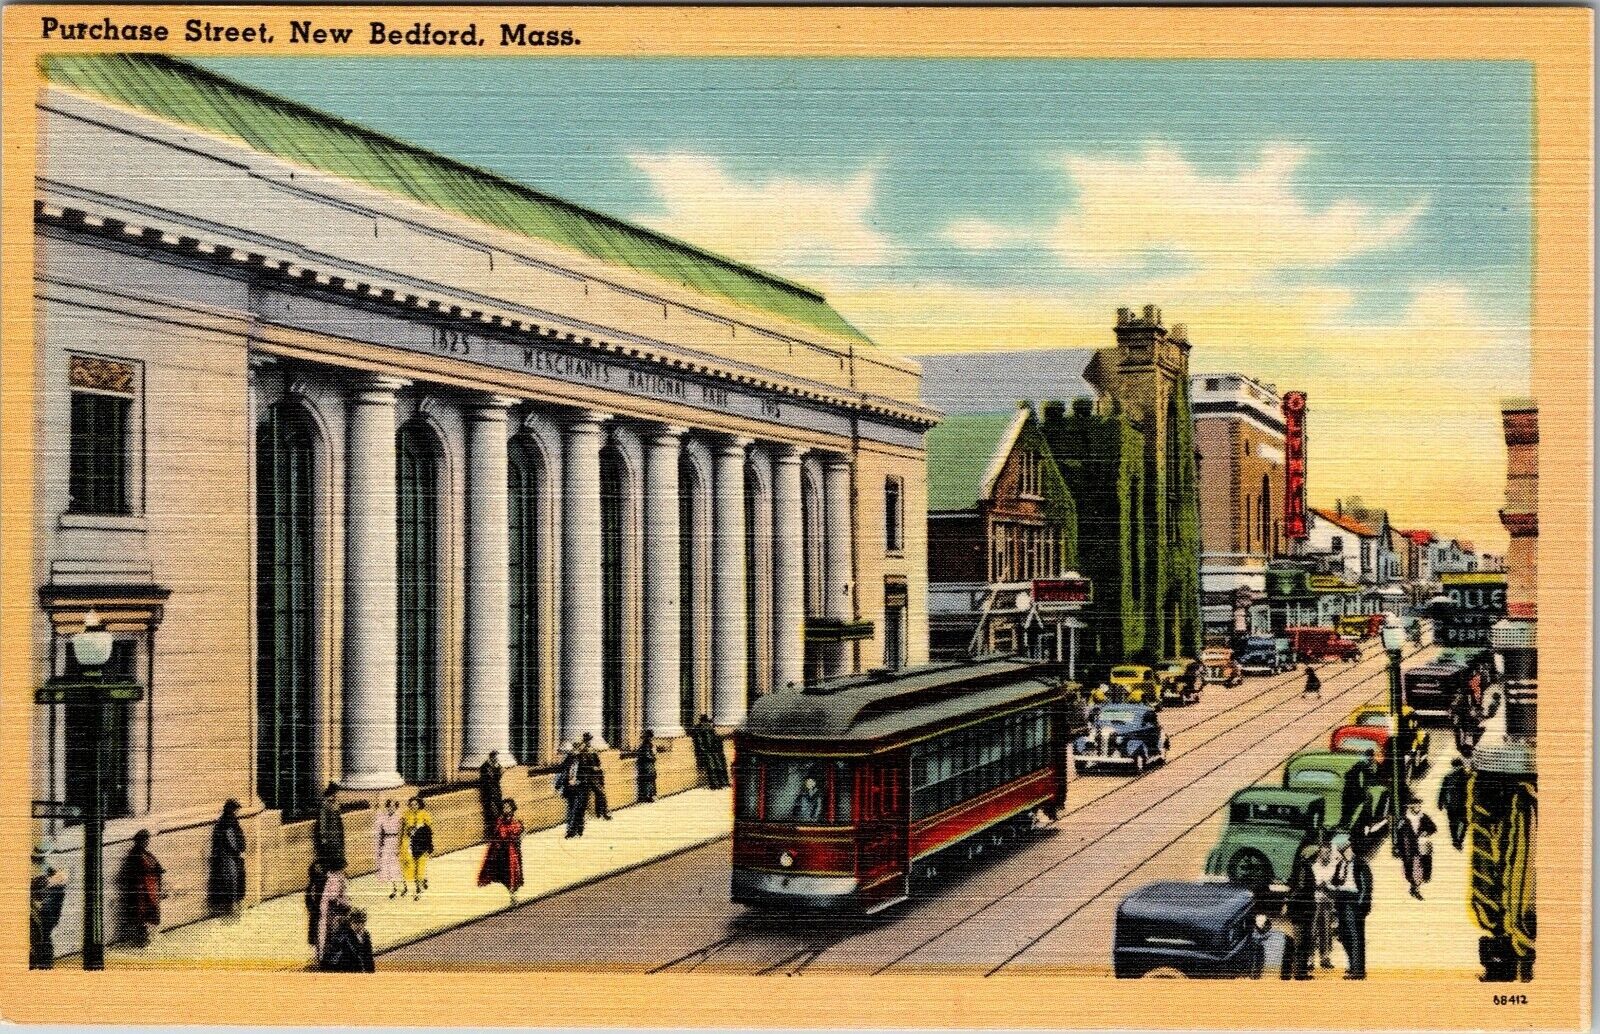 New Bedford  Massachusetts Purchase Street Vintage Postcard Linen (c. 1930-1945)